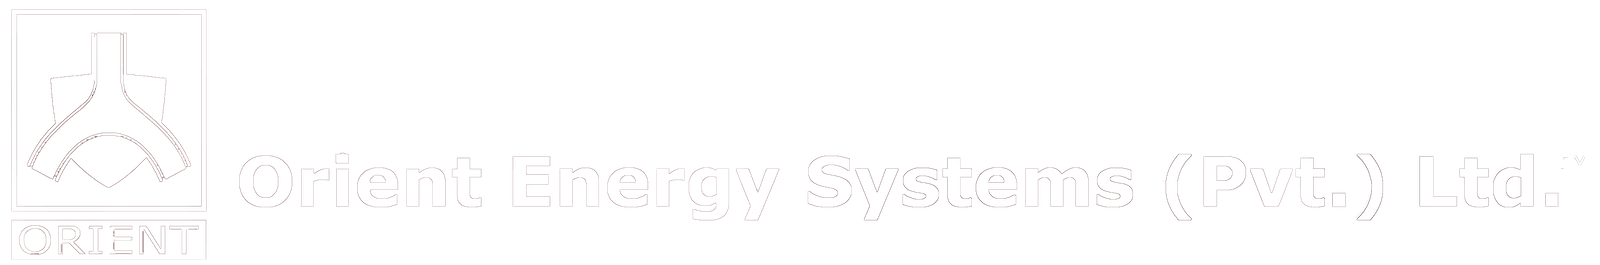 Orient Energy Systems Ltd., Bangladesh